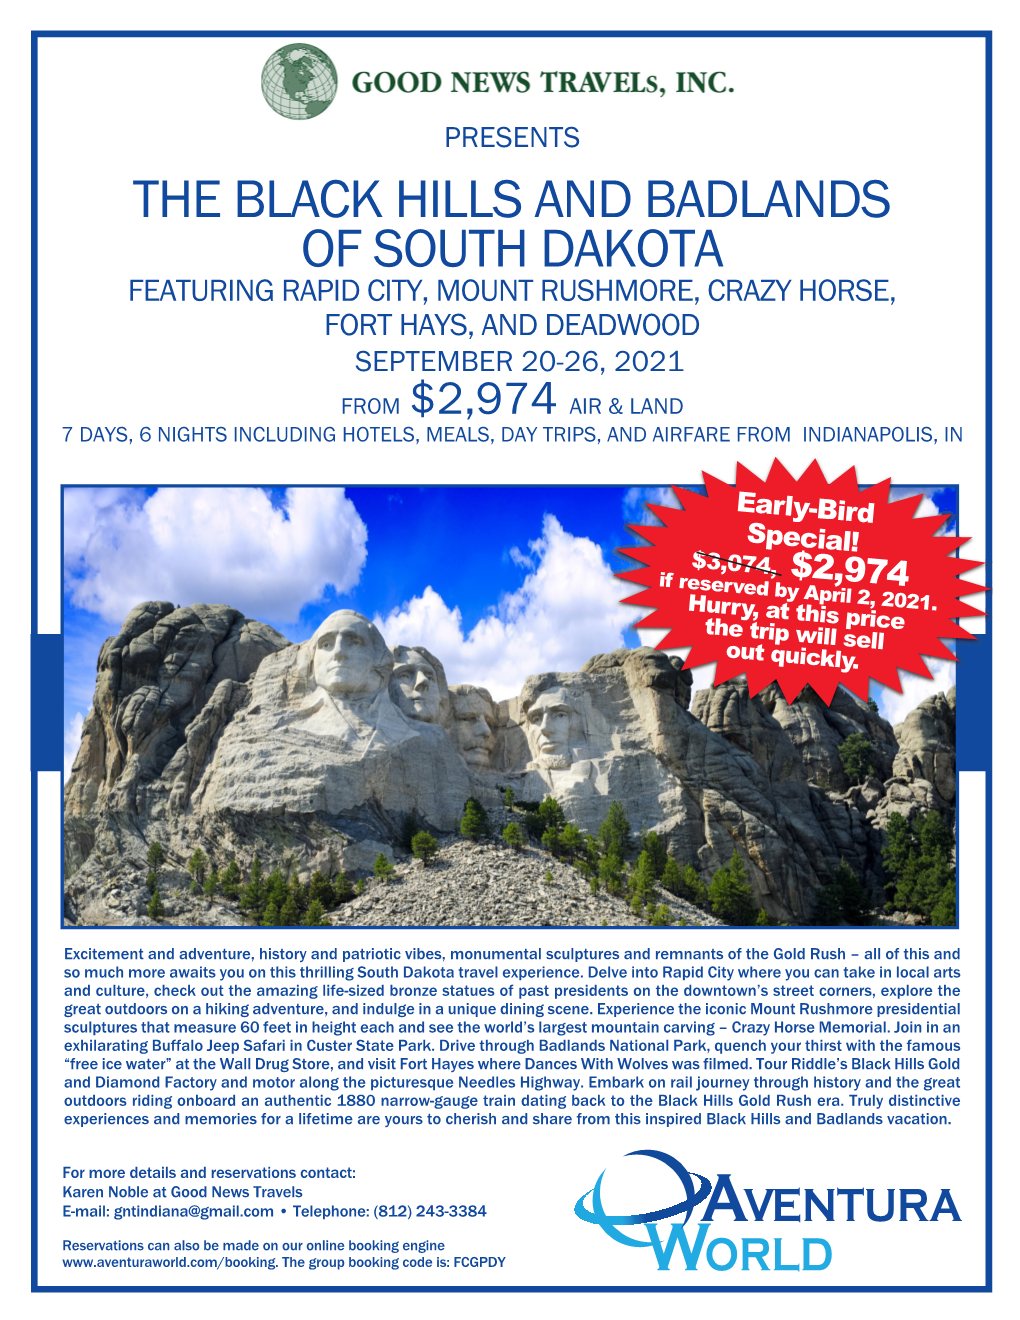 The Black Hills and Badlands of South Dakota